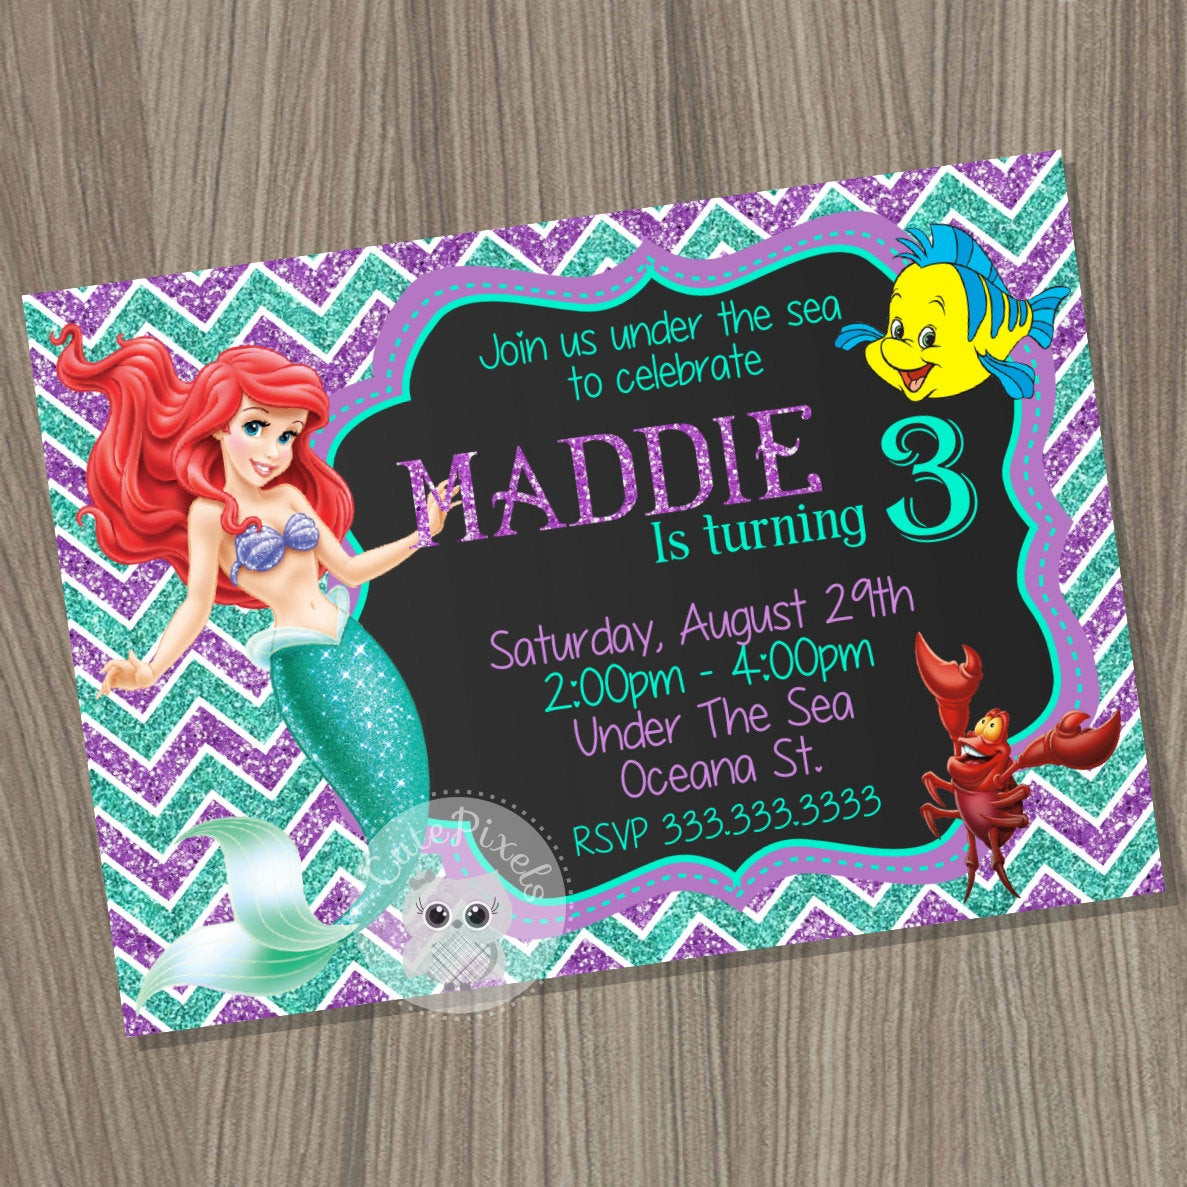 Best ideas about Little Mermaid Birthday Invitations
. Save or Pin Little Mermaid Invitation Ariel Invitation Disney Little Now.